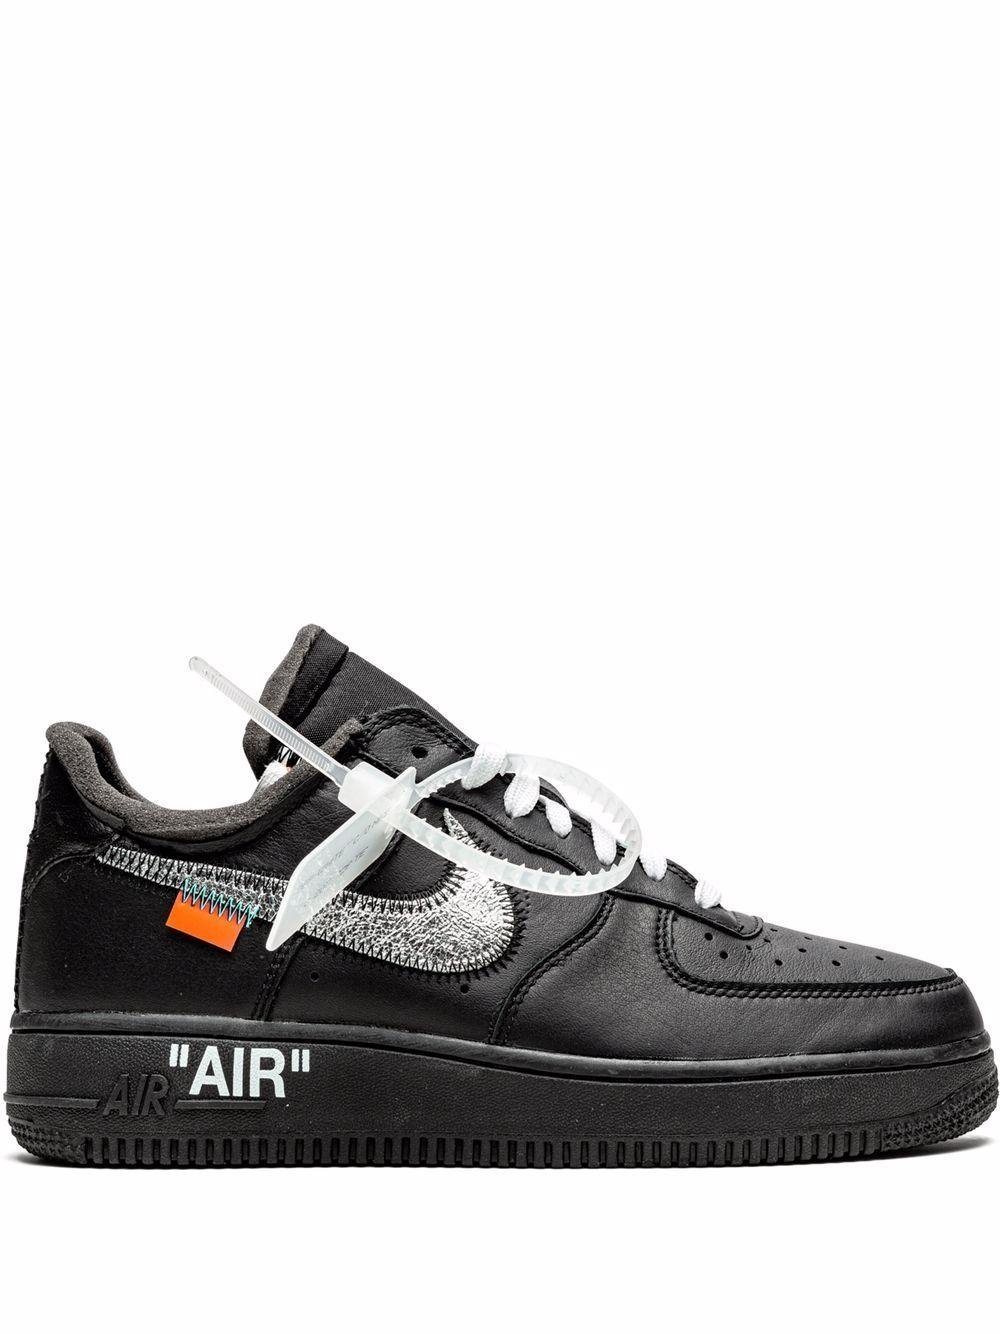 MoMA x Virgil Abloh Nike Air Force 1 '07 Coming Soon •